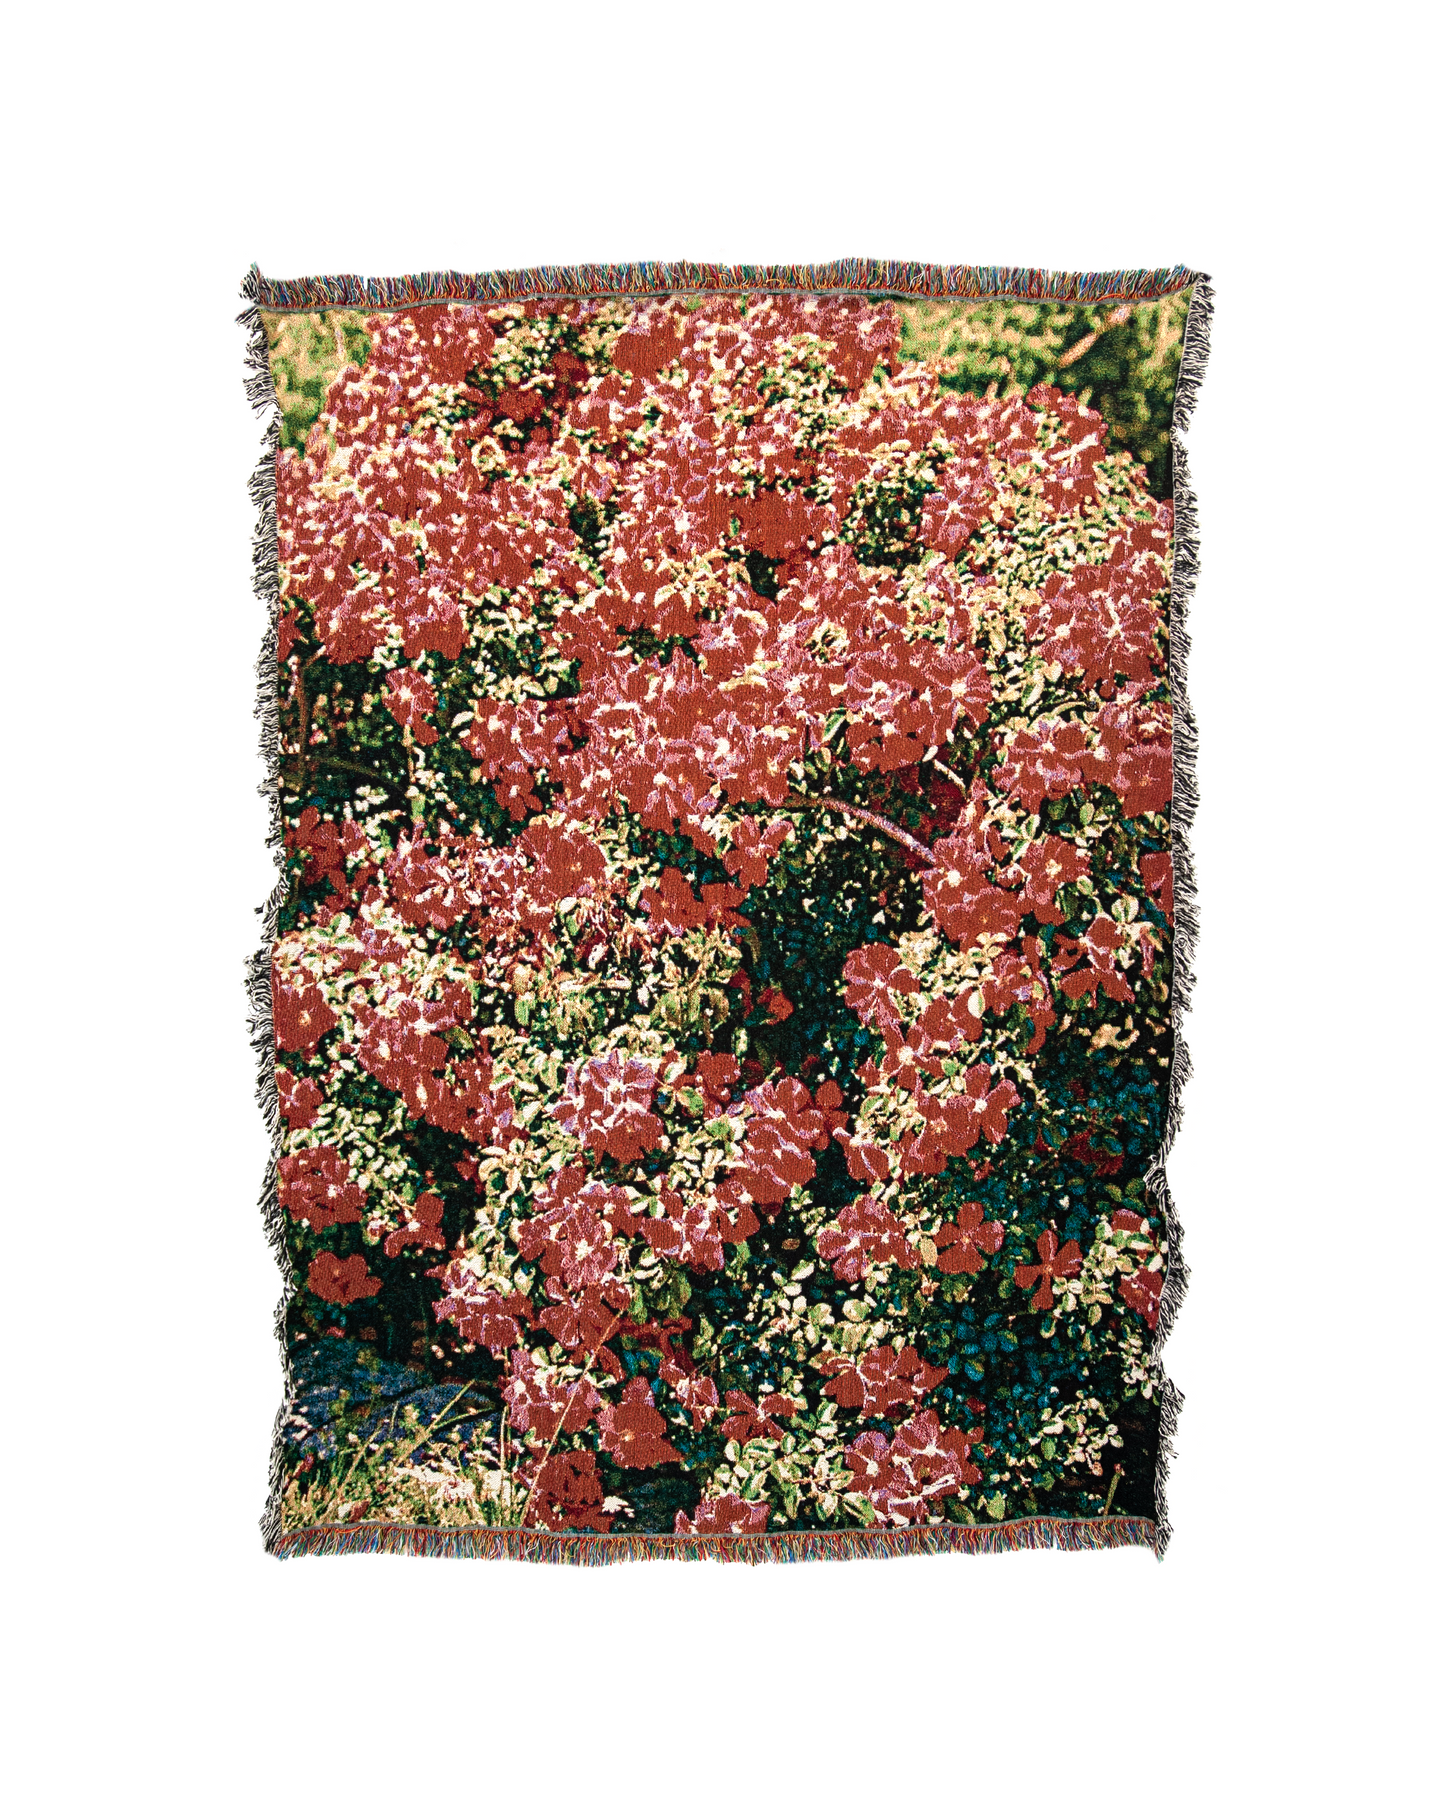 "FLOWERS" Woven blanket